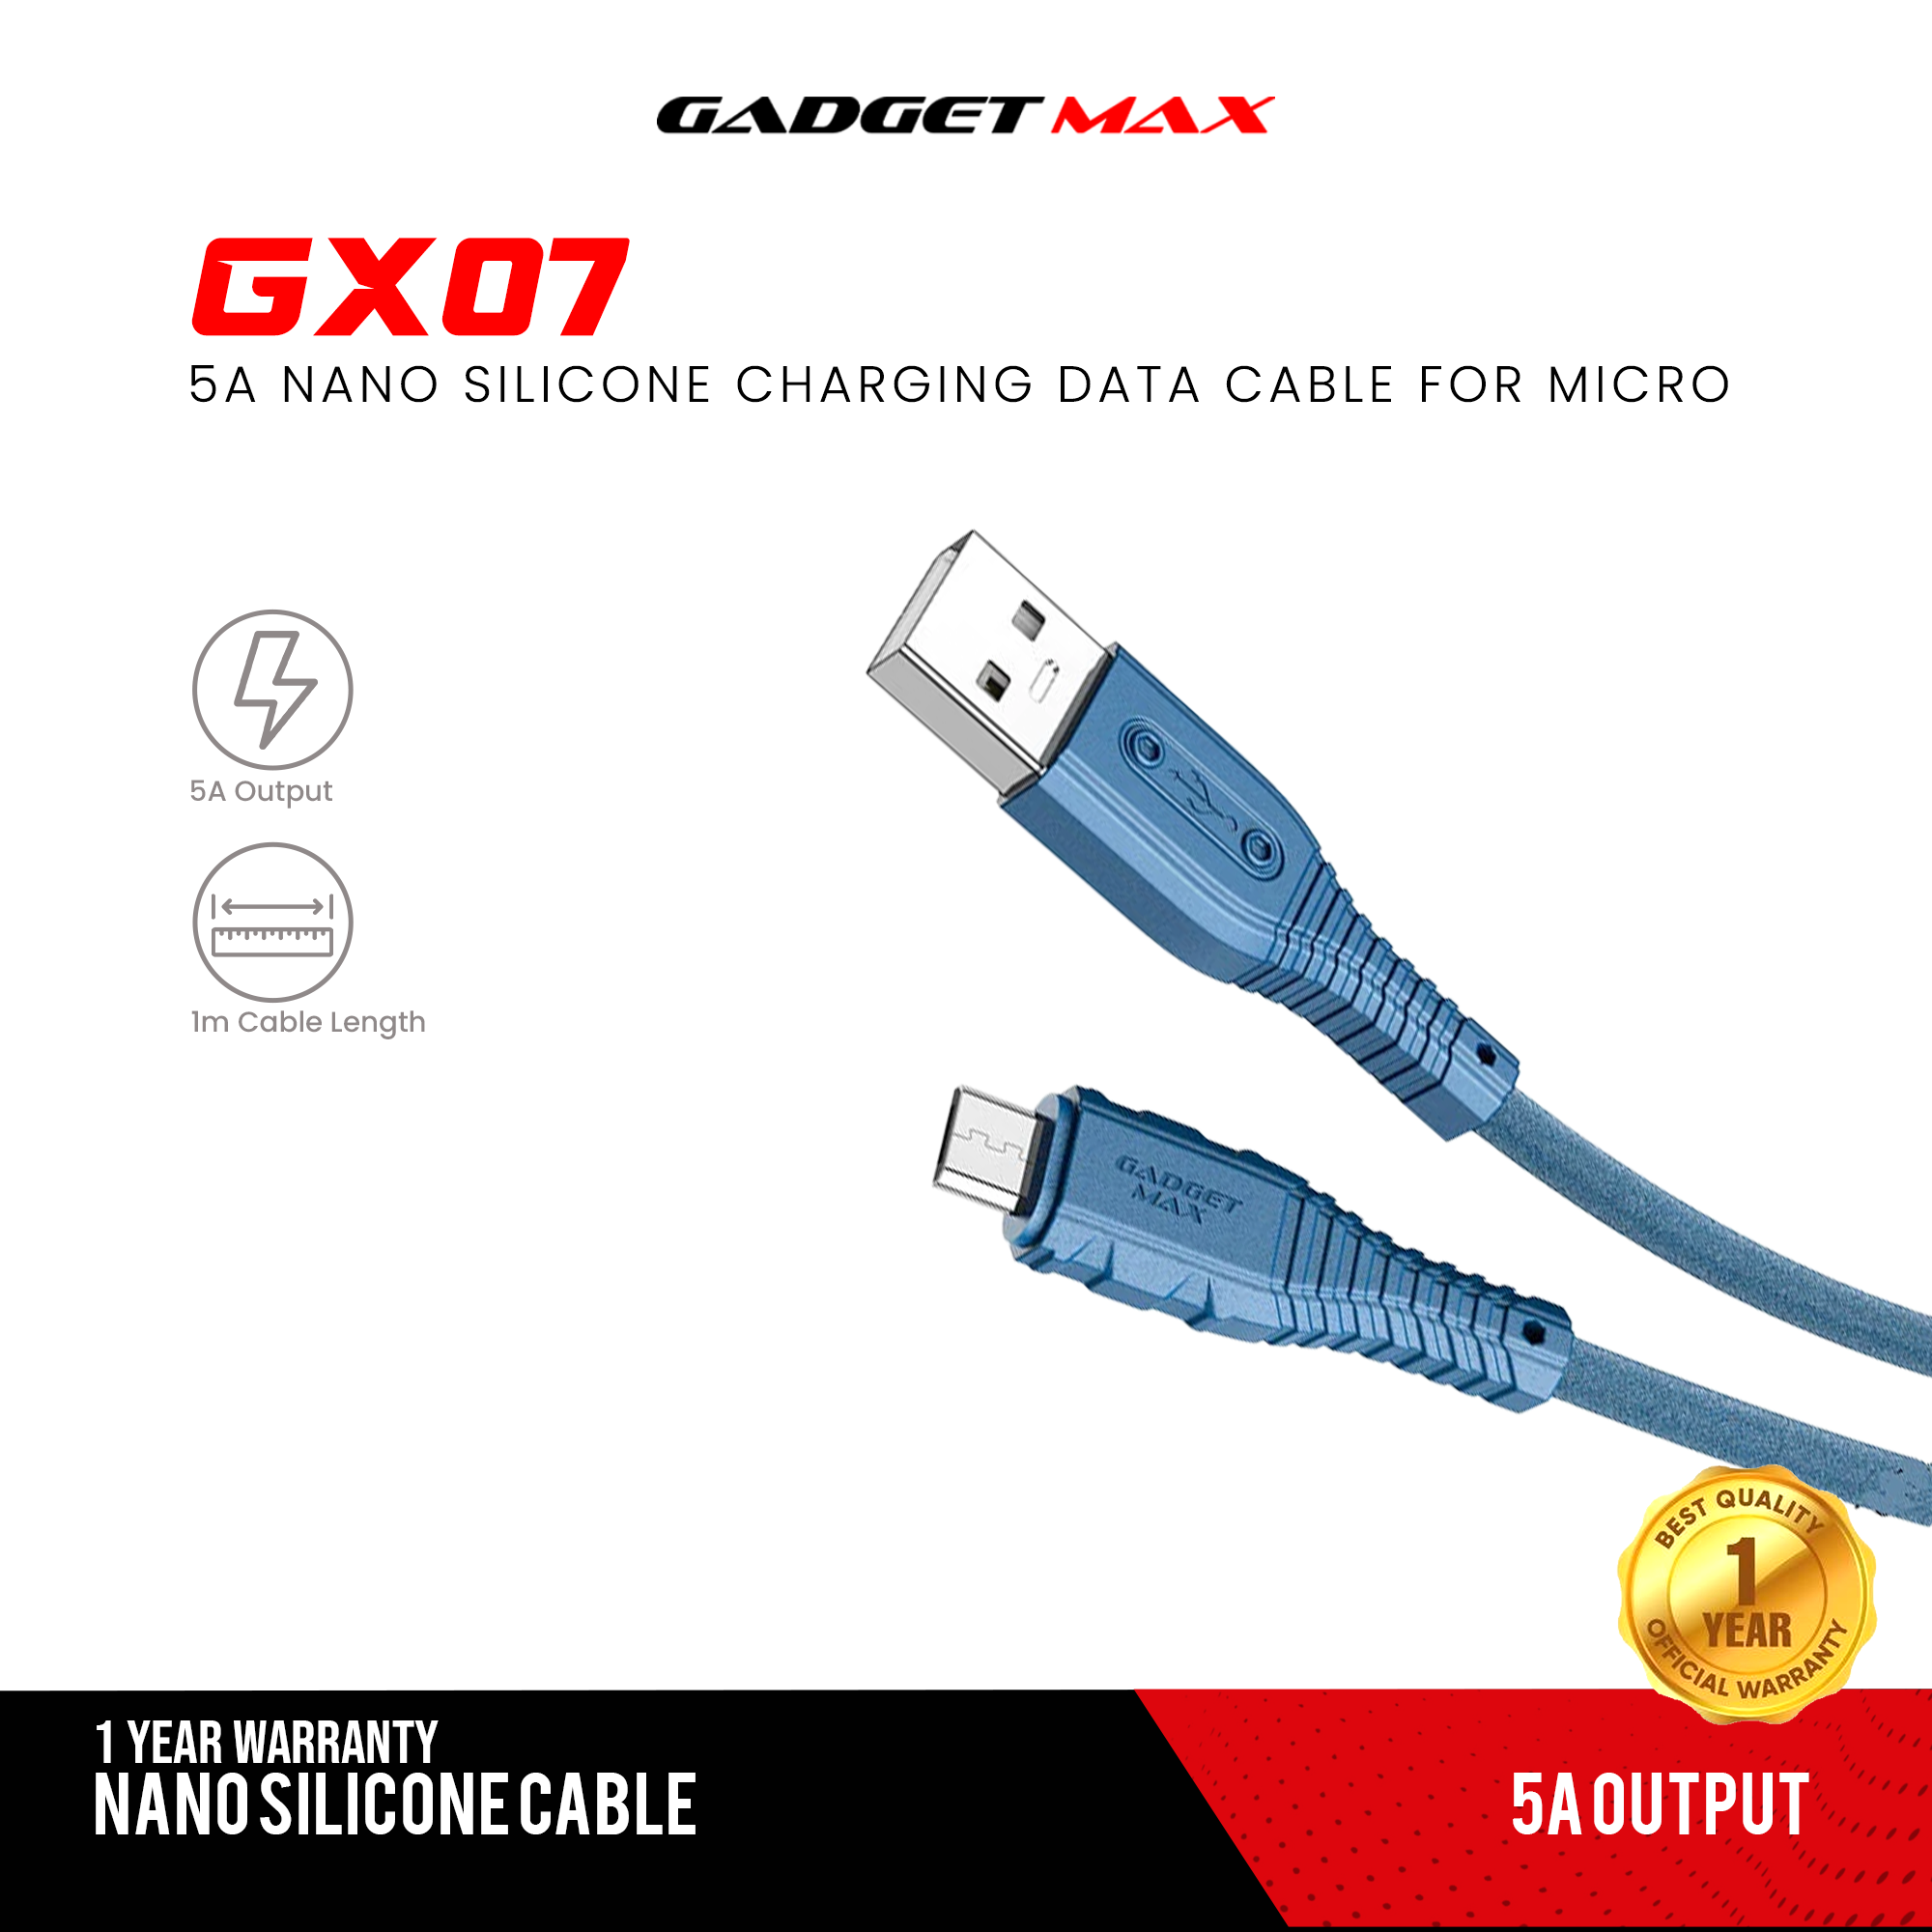 GADGET MAX GX07 MICRO 2.4A NANO SILICONE CHARGING DATA CABLE FOR MICRO (2.4A)(1M) - BLUE